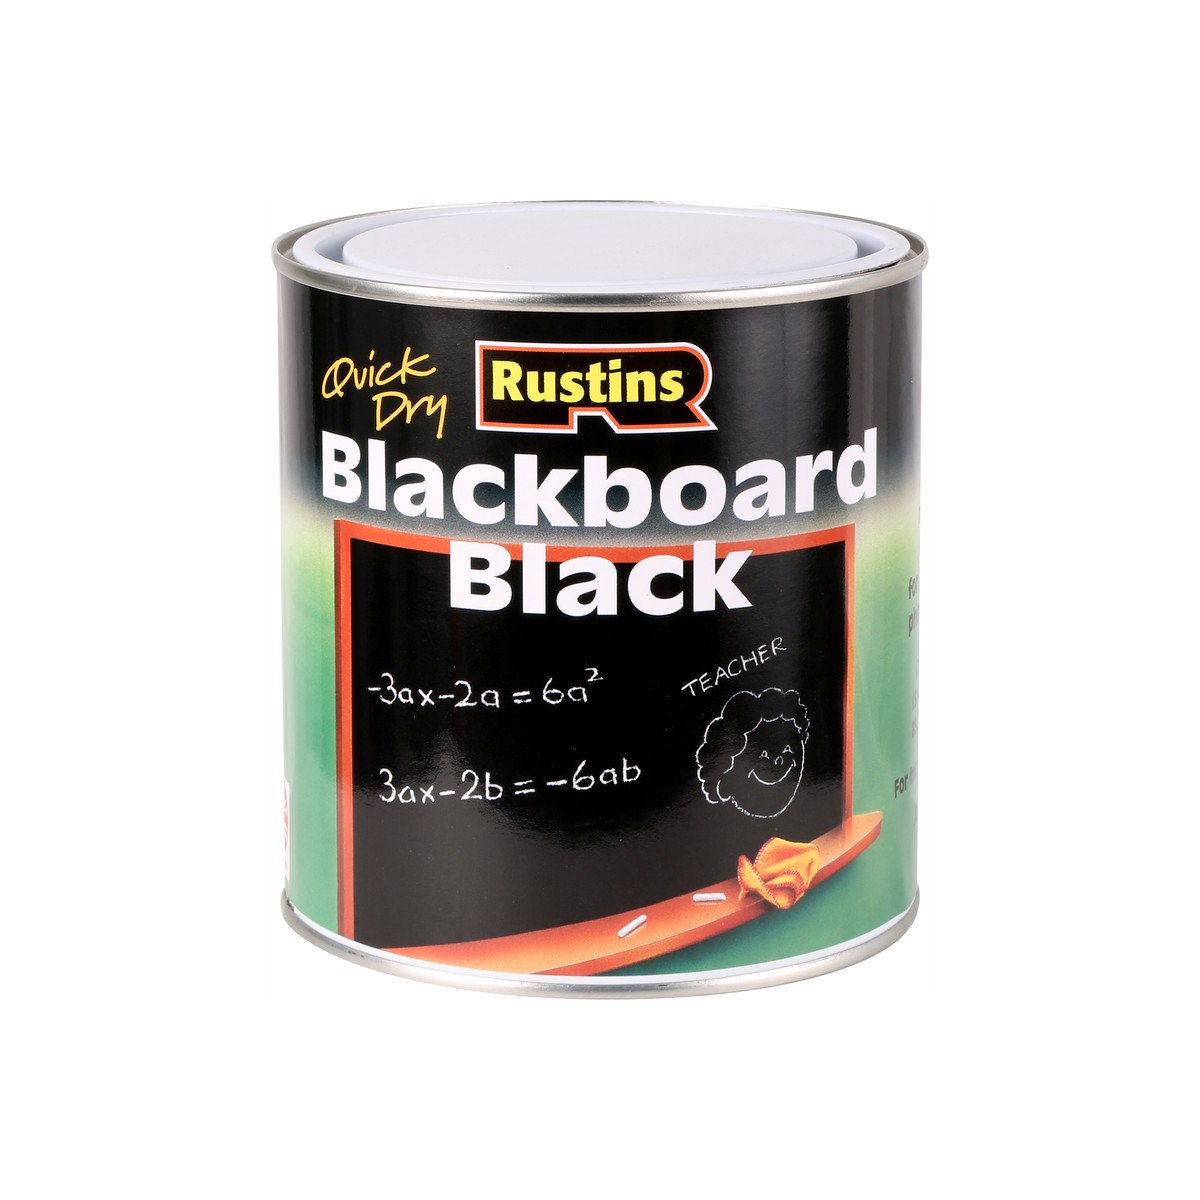 Rustins Quick Dry Blackboard Paint Black 500ml